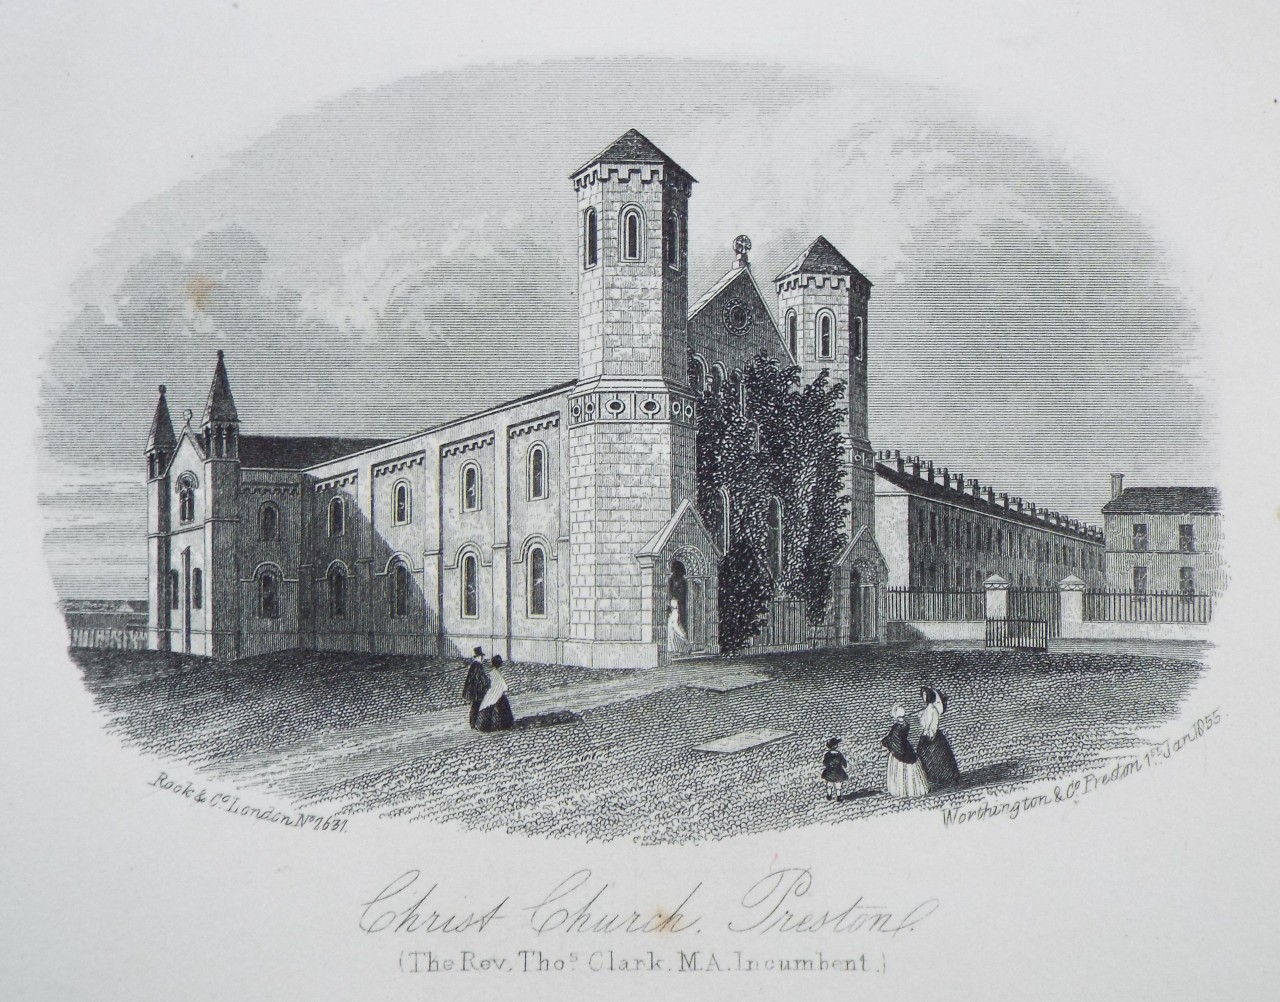 Steel Vignette - Christ Church, Preston. (The Rev. Thos. Clark M.A. Incumbent.) - Rock